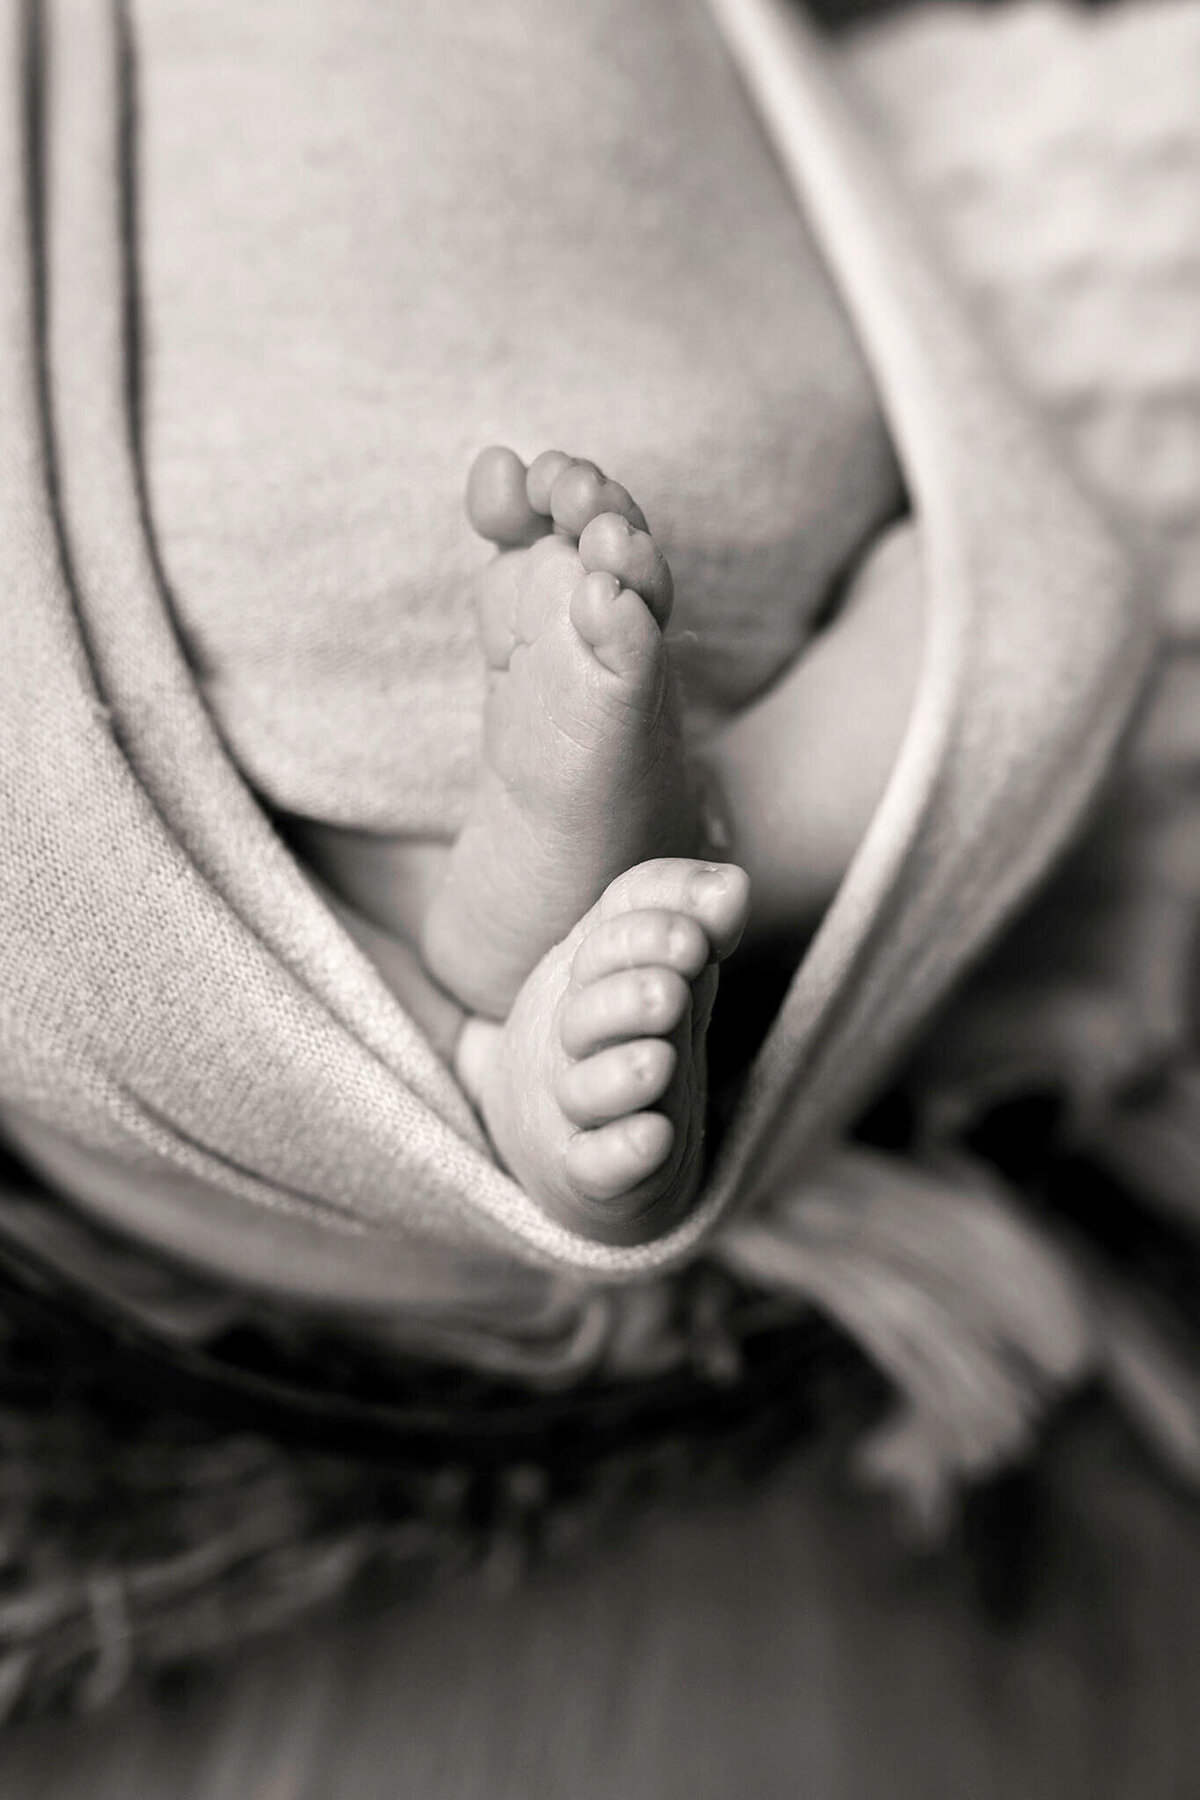 NJ Newborn photos of baby feet